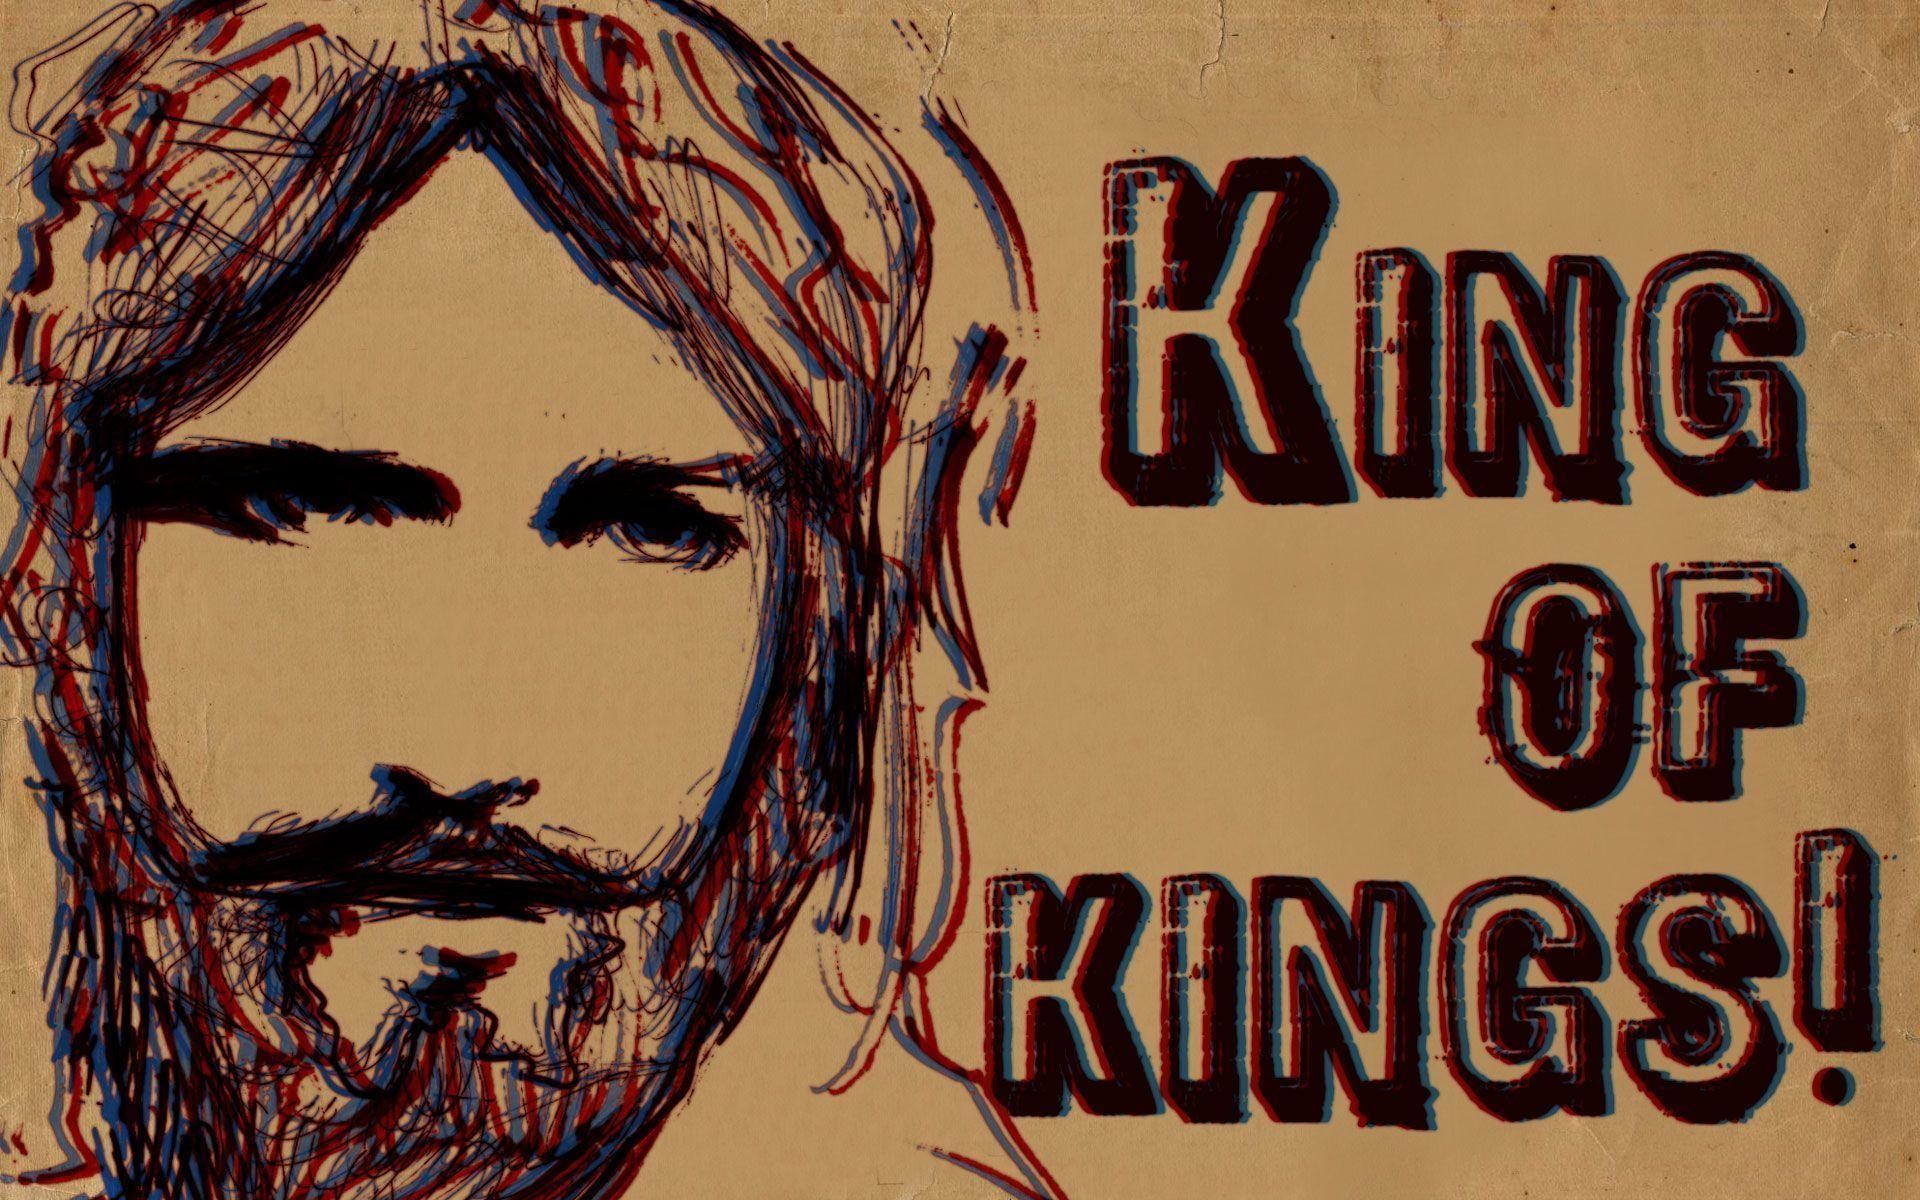 1920x1200 Wallpaper: Jesus, King of kings! | love